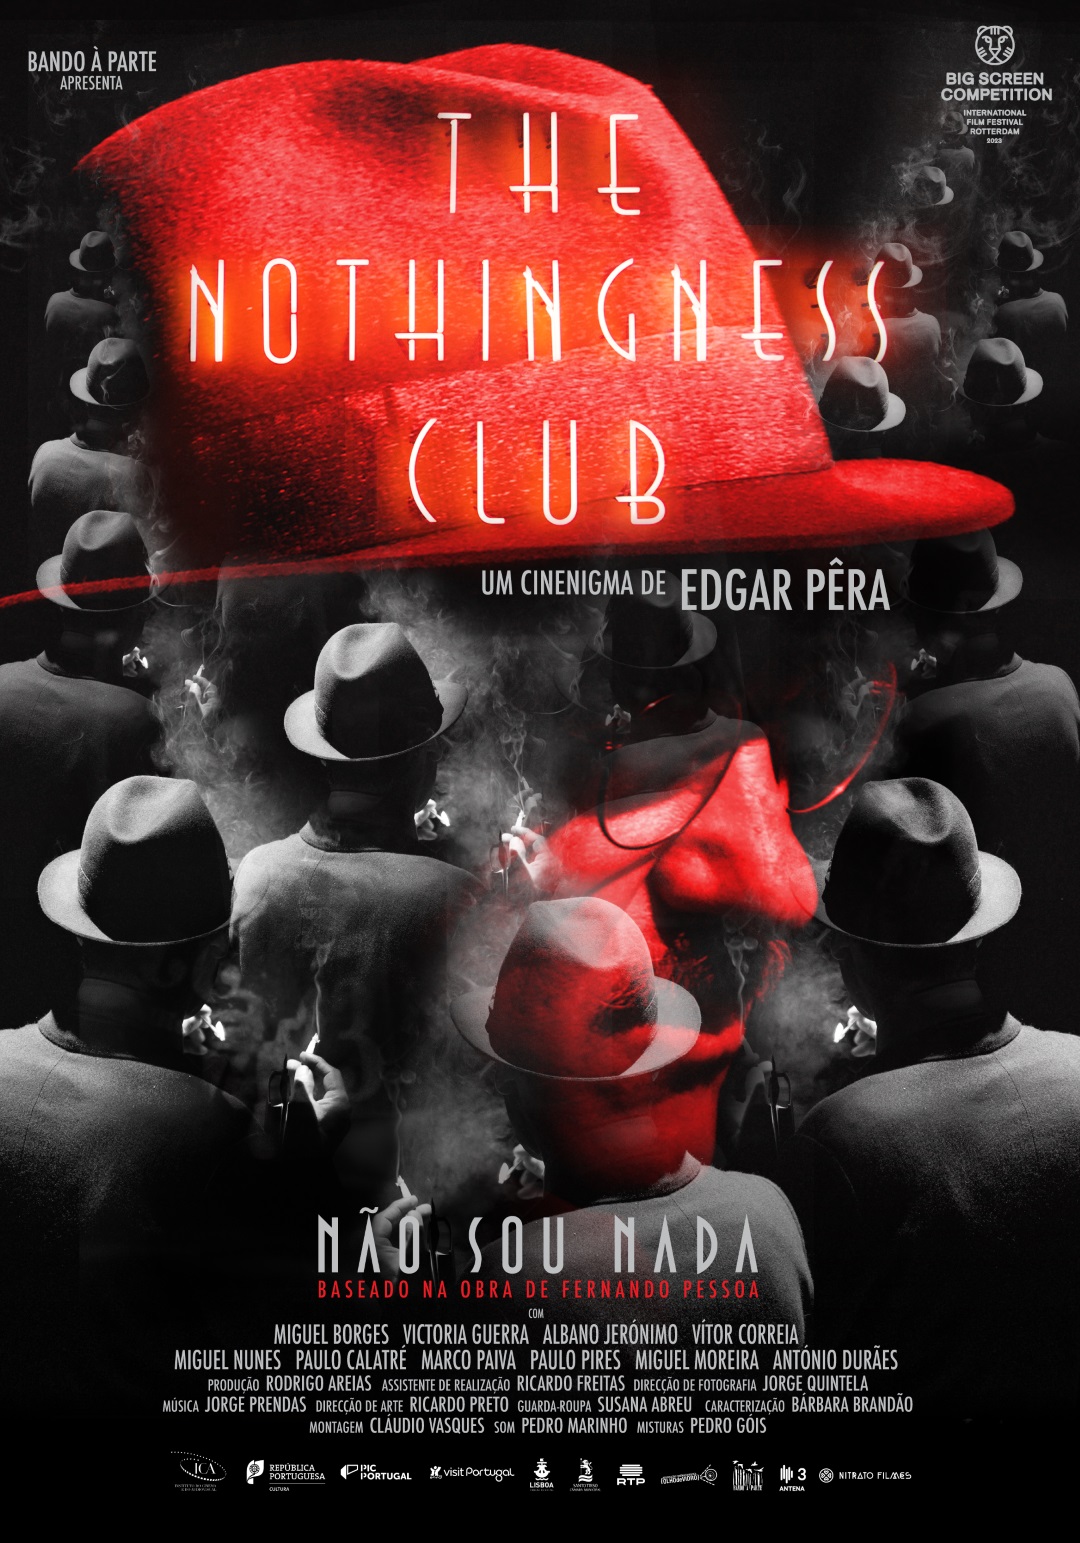 Nothingness Club